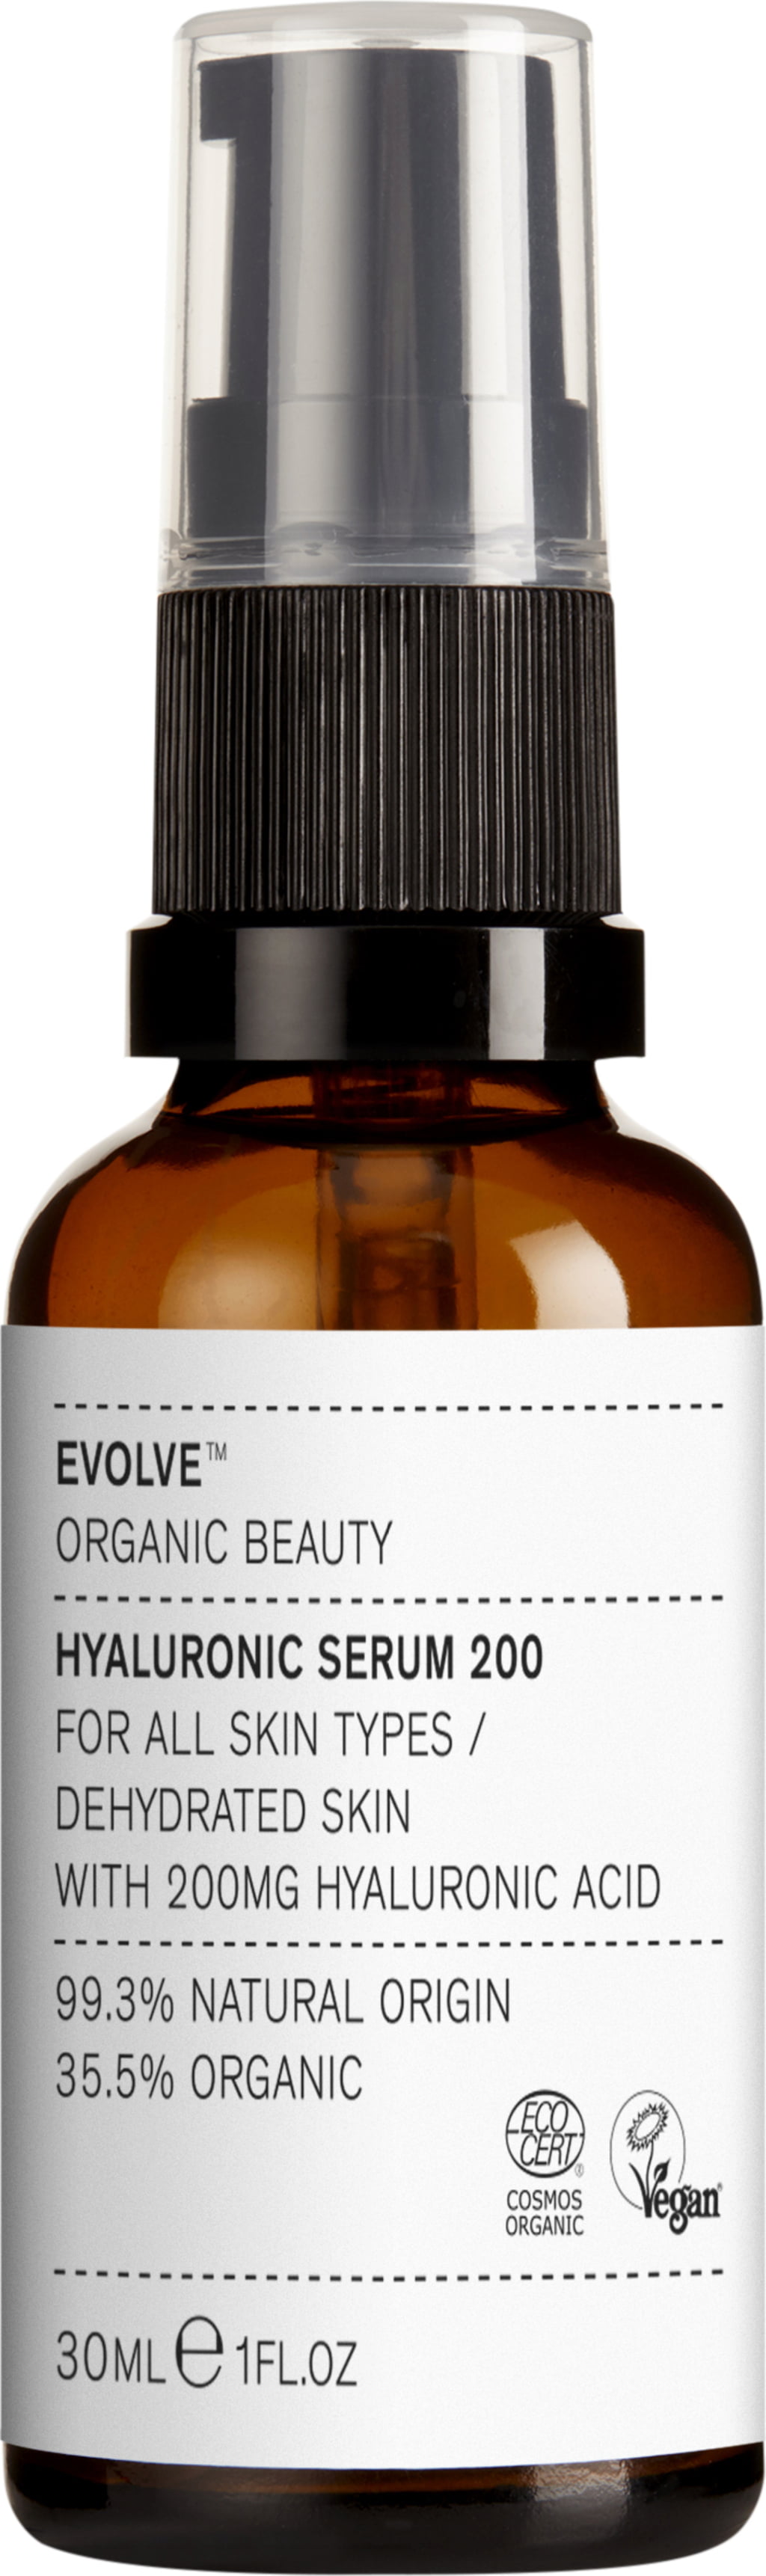 Evolve Organic Beauty Hyaluronic szérum 200 - 30 ml